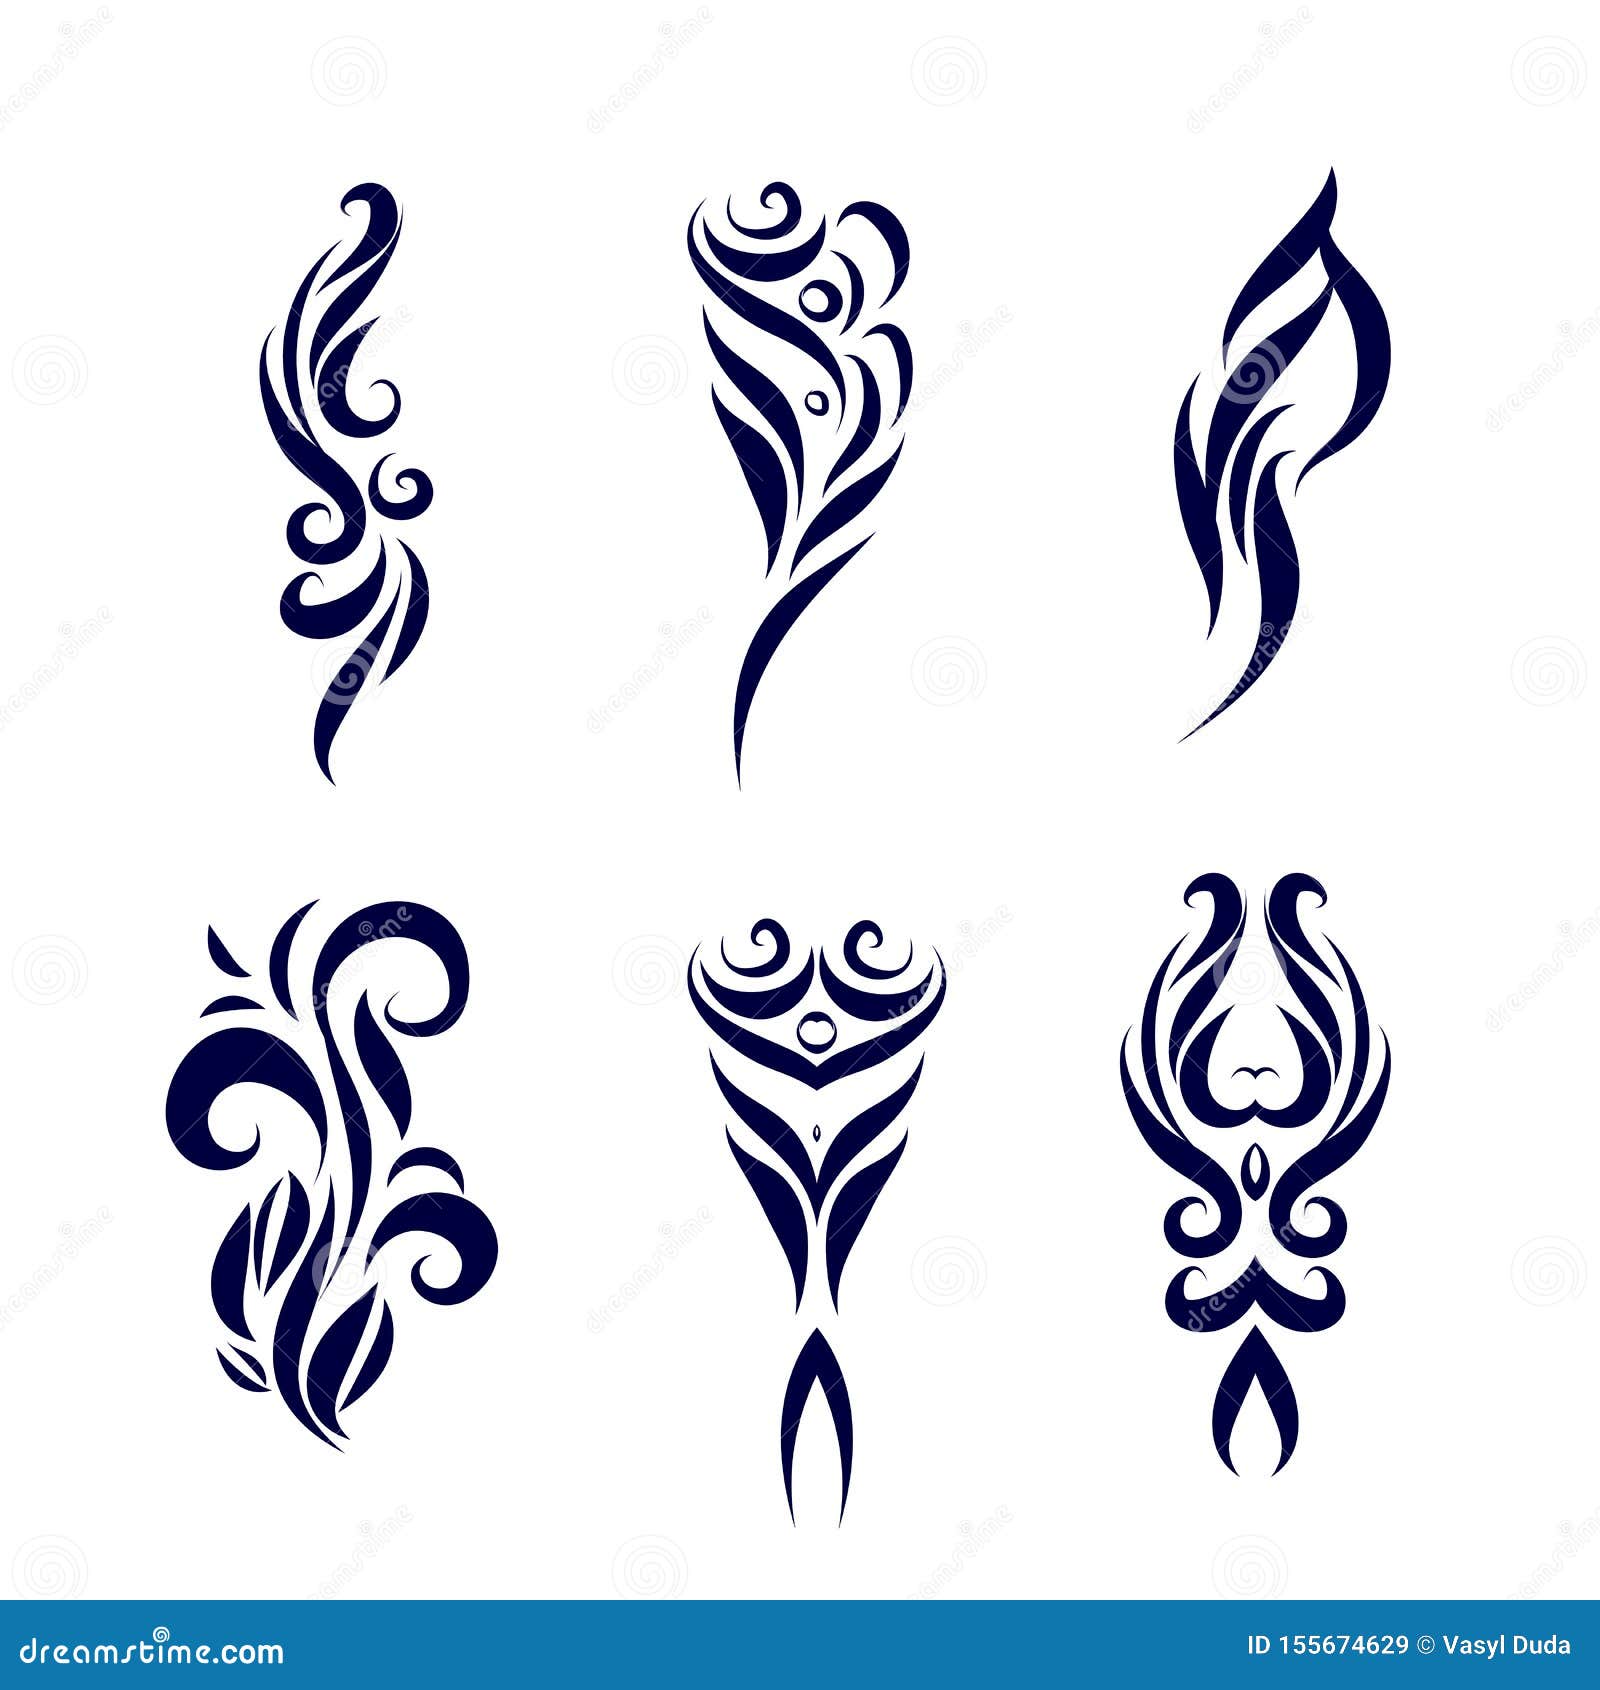 Tribal Tattoo stock vector. Illustration of curl, logo - 155674629